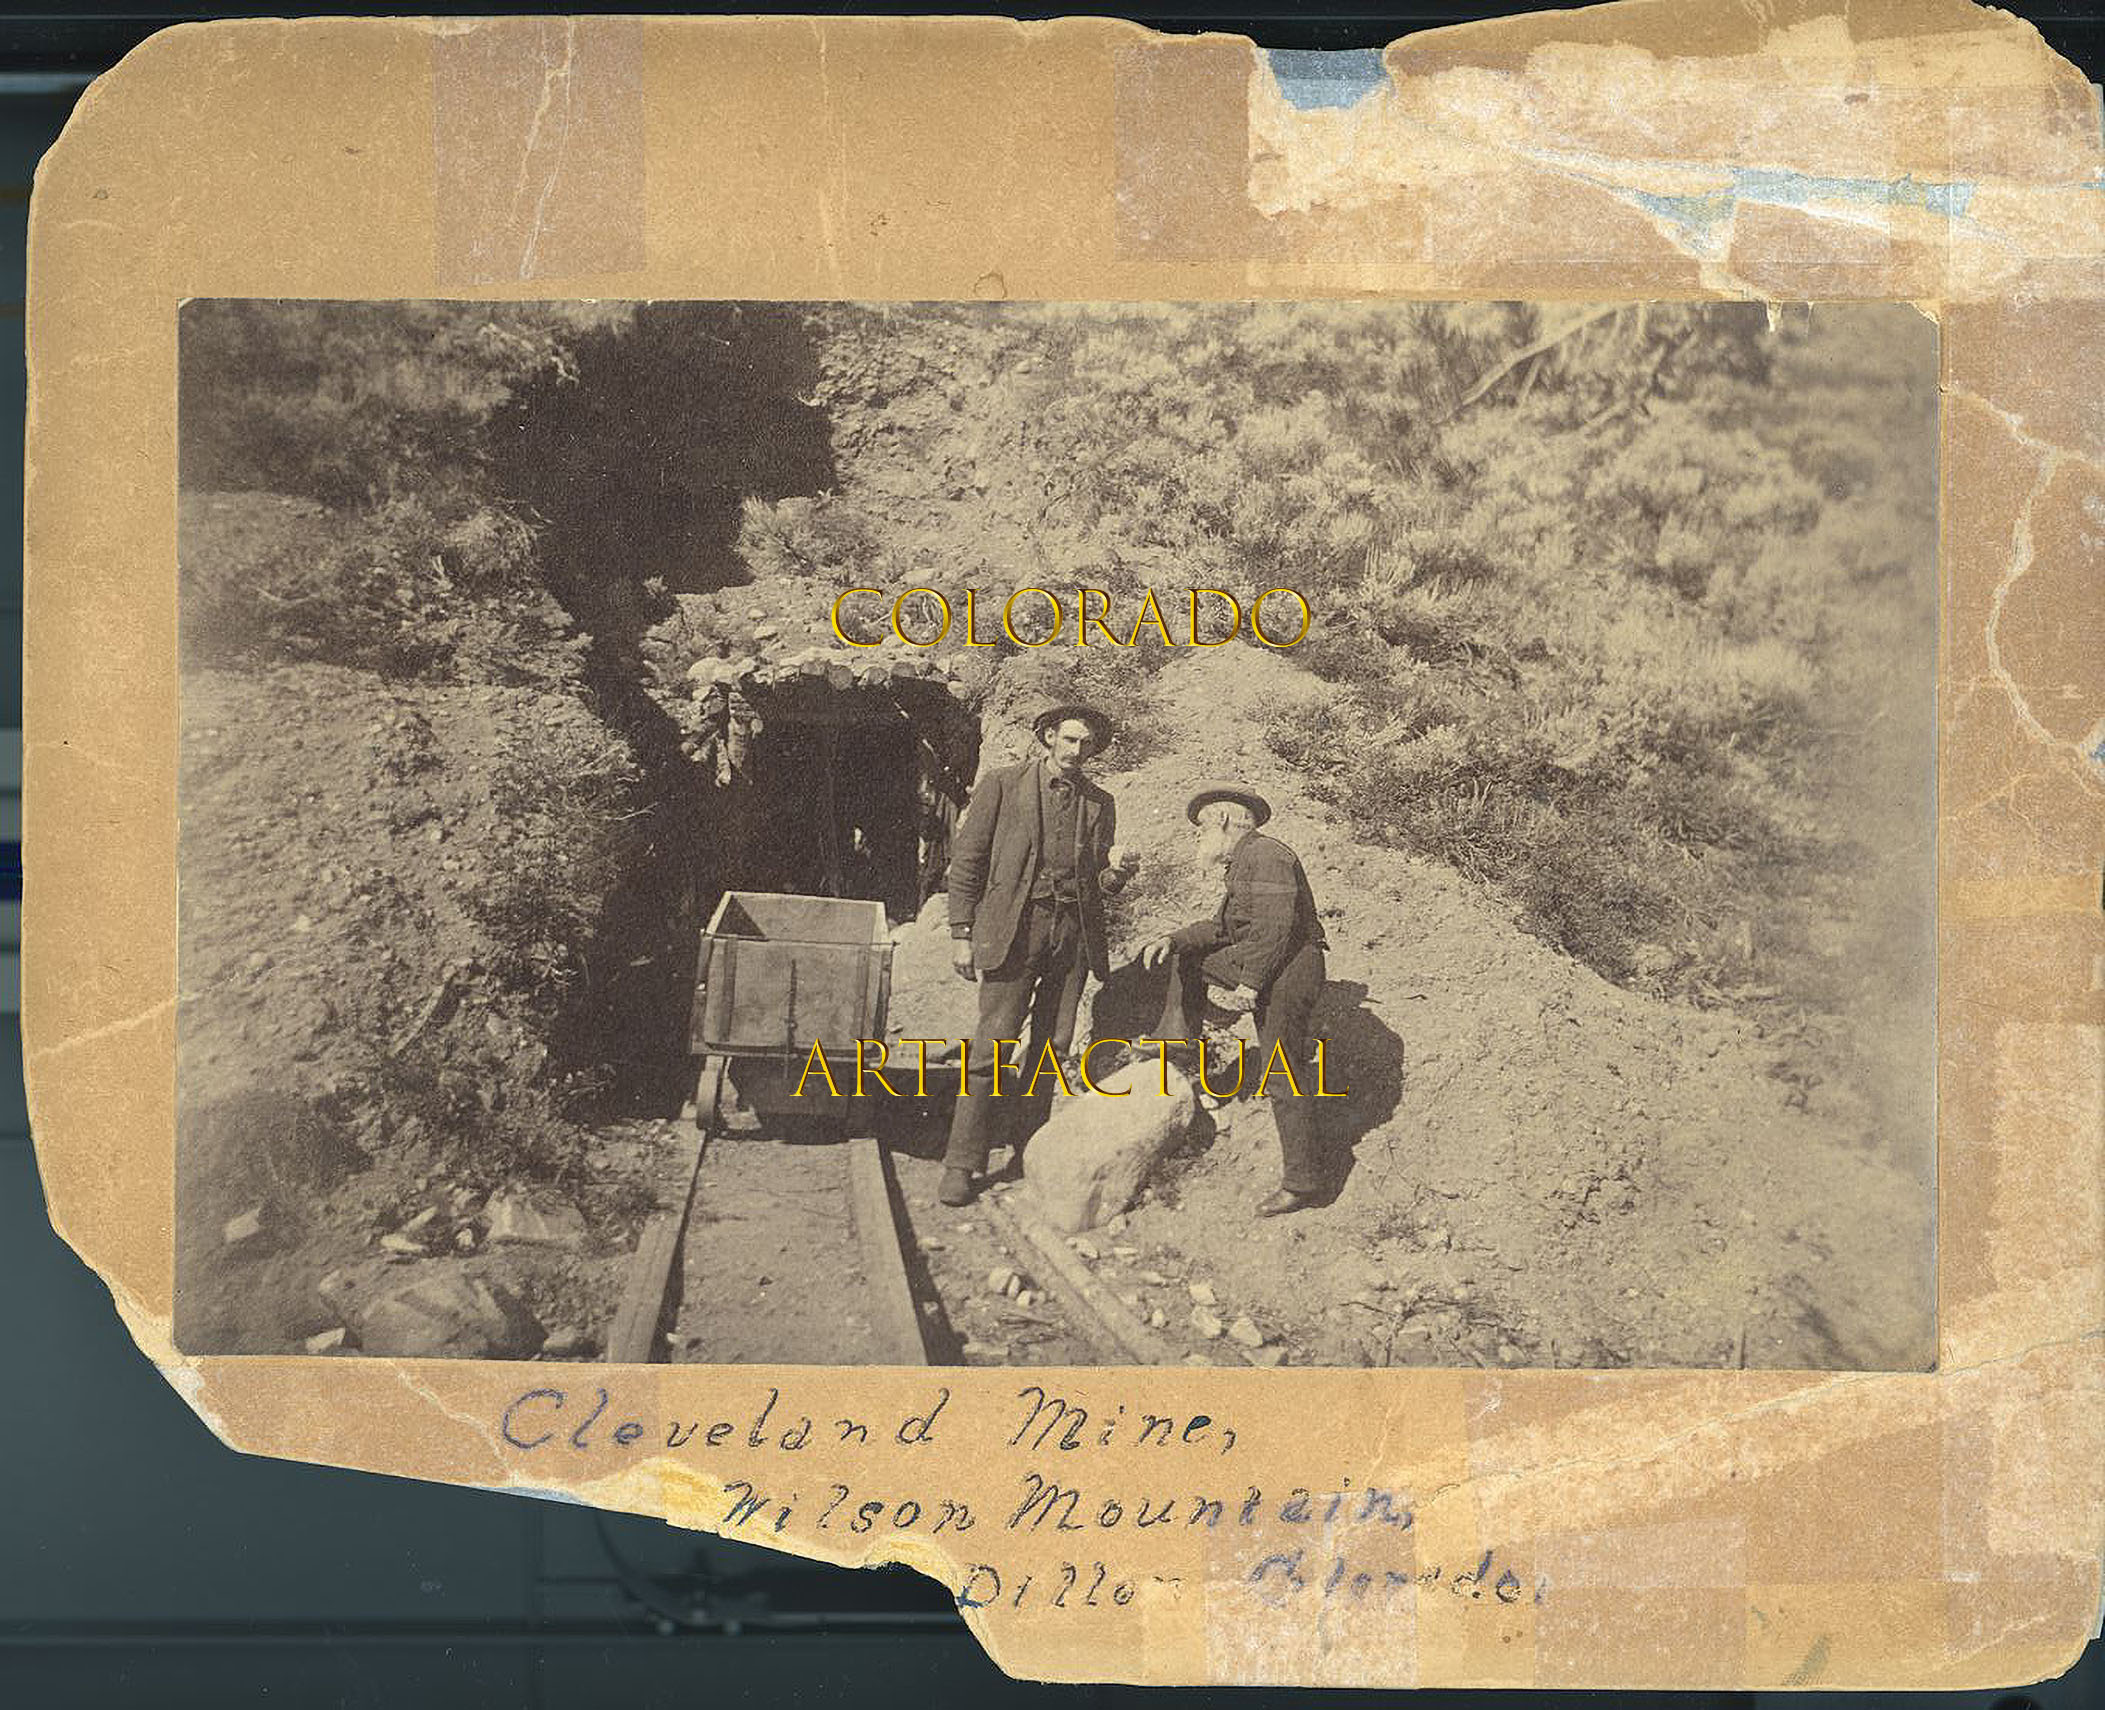 Cleveland Mine Wilson Mountain near Dillon Summit County Colorado antique photograph 1895